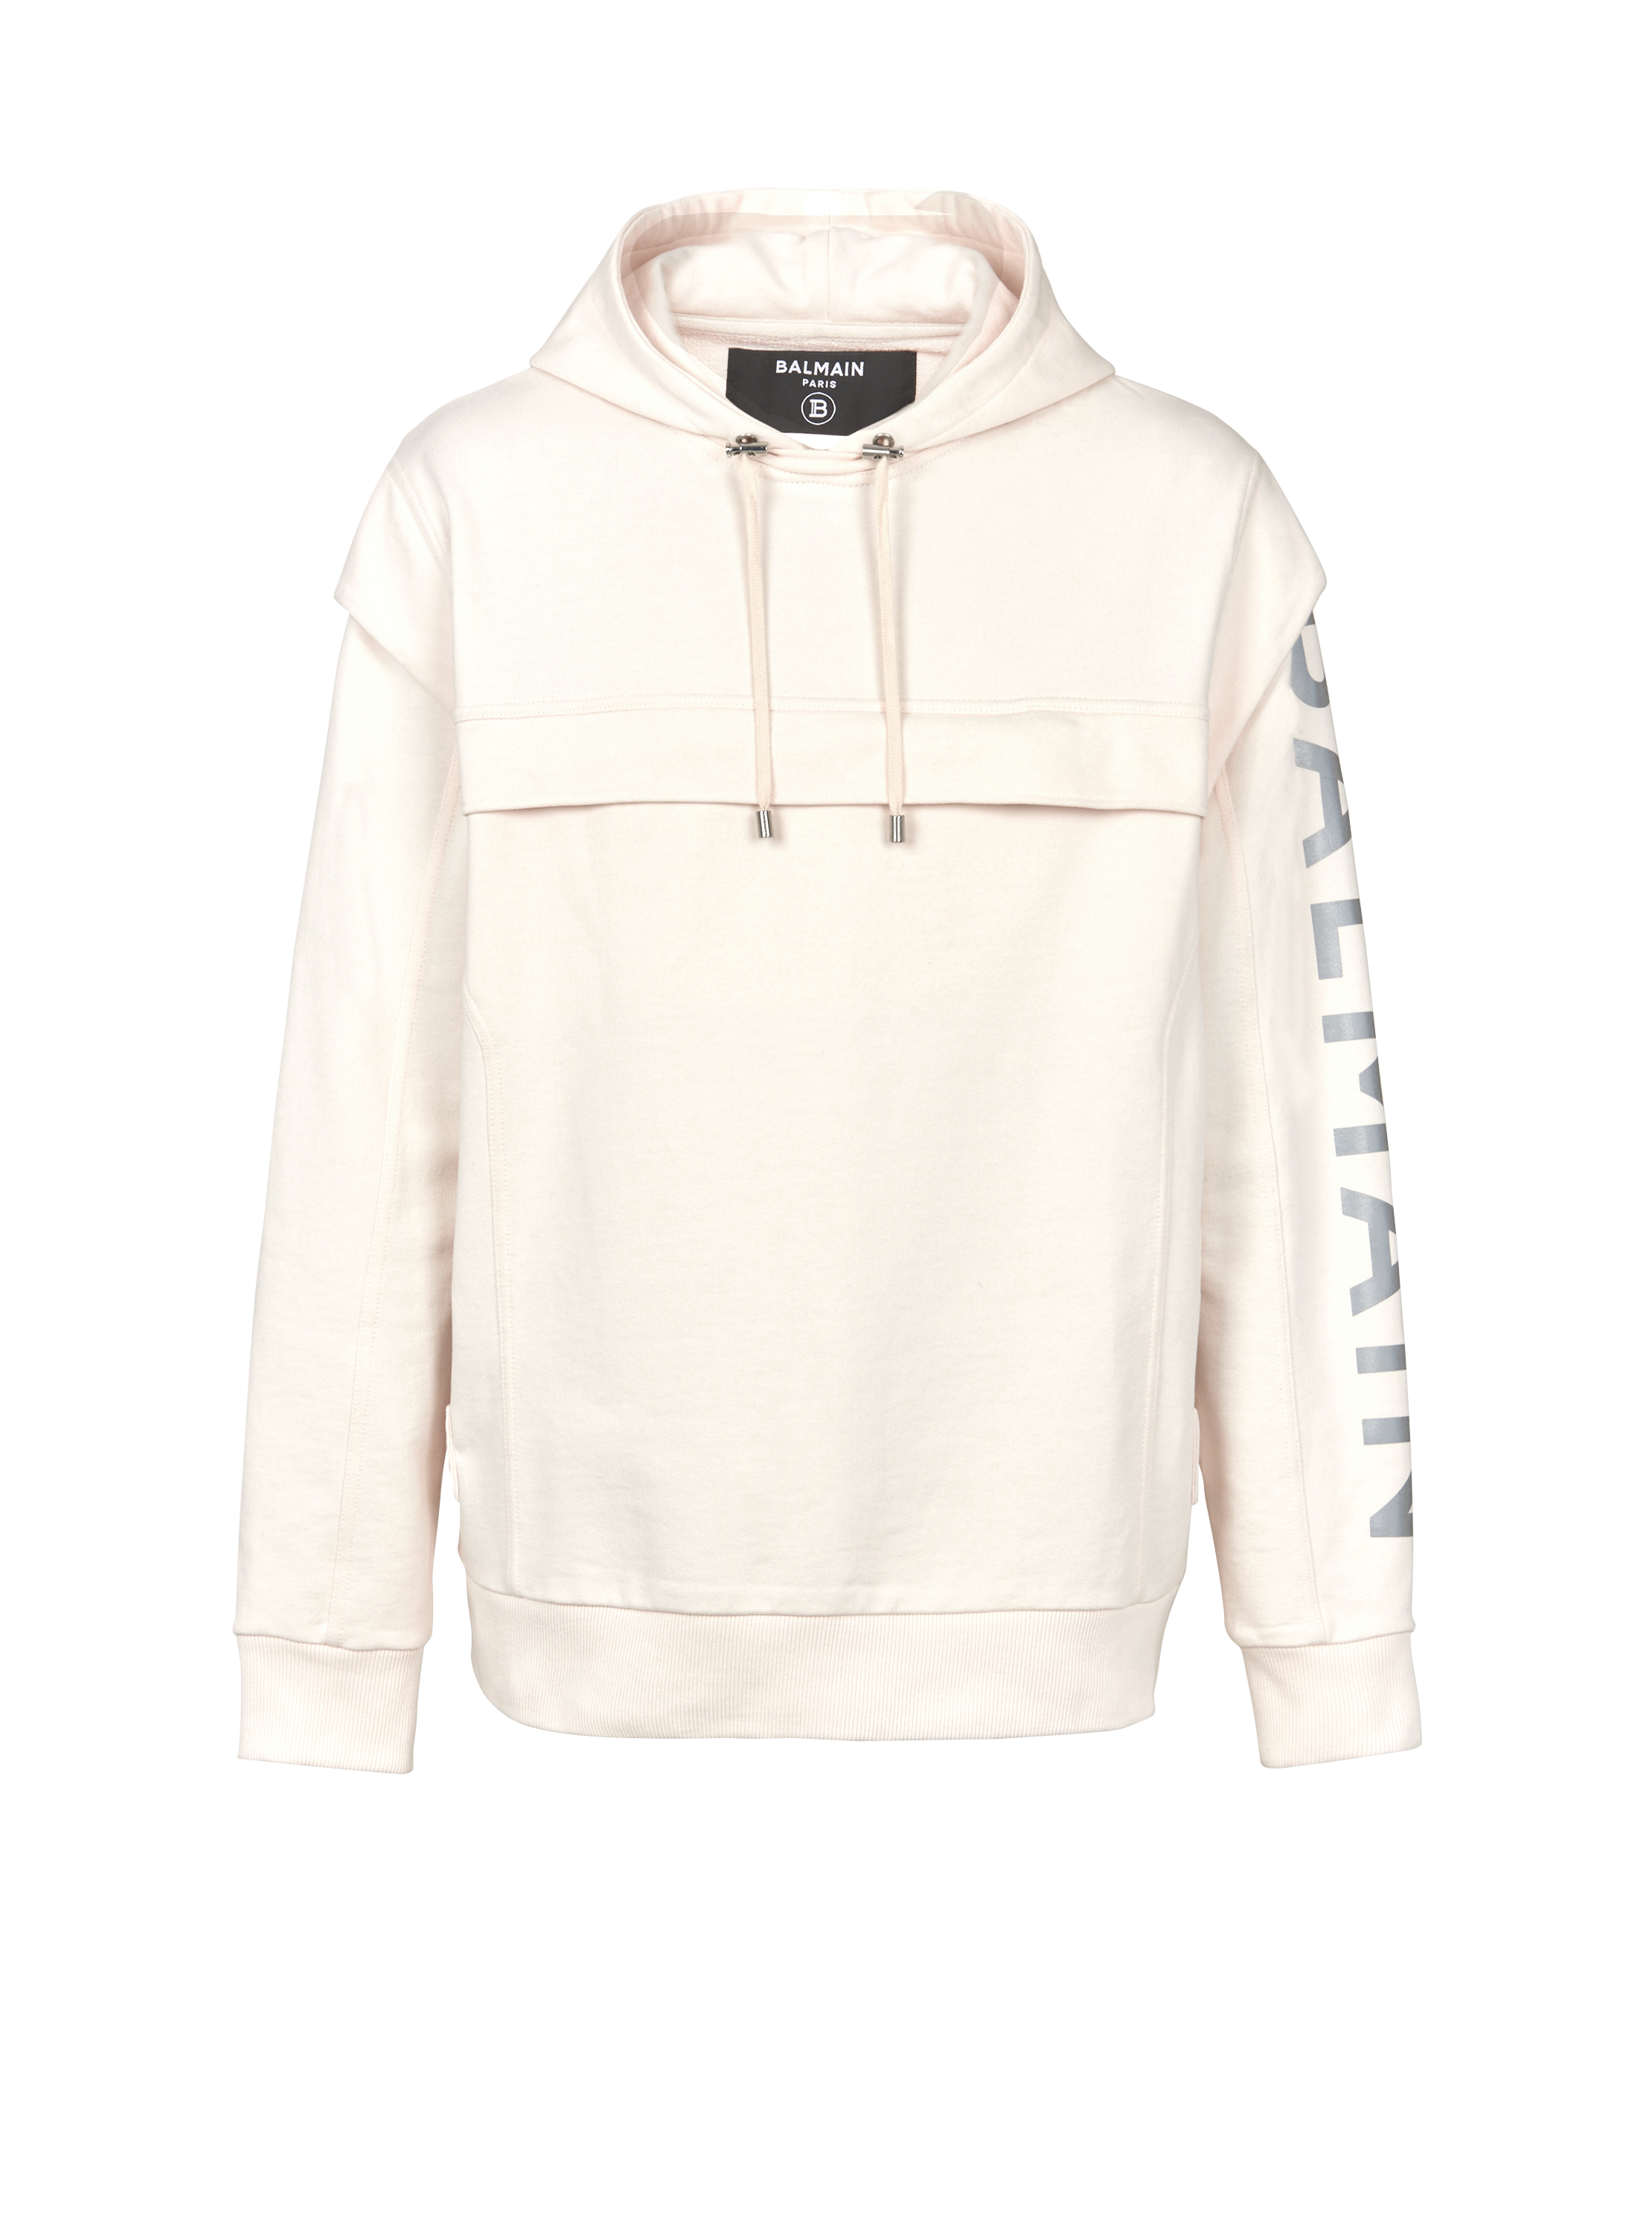 Cotton printed Balmain logo hoodie, beige, hi-res